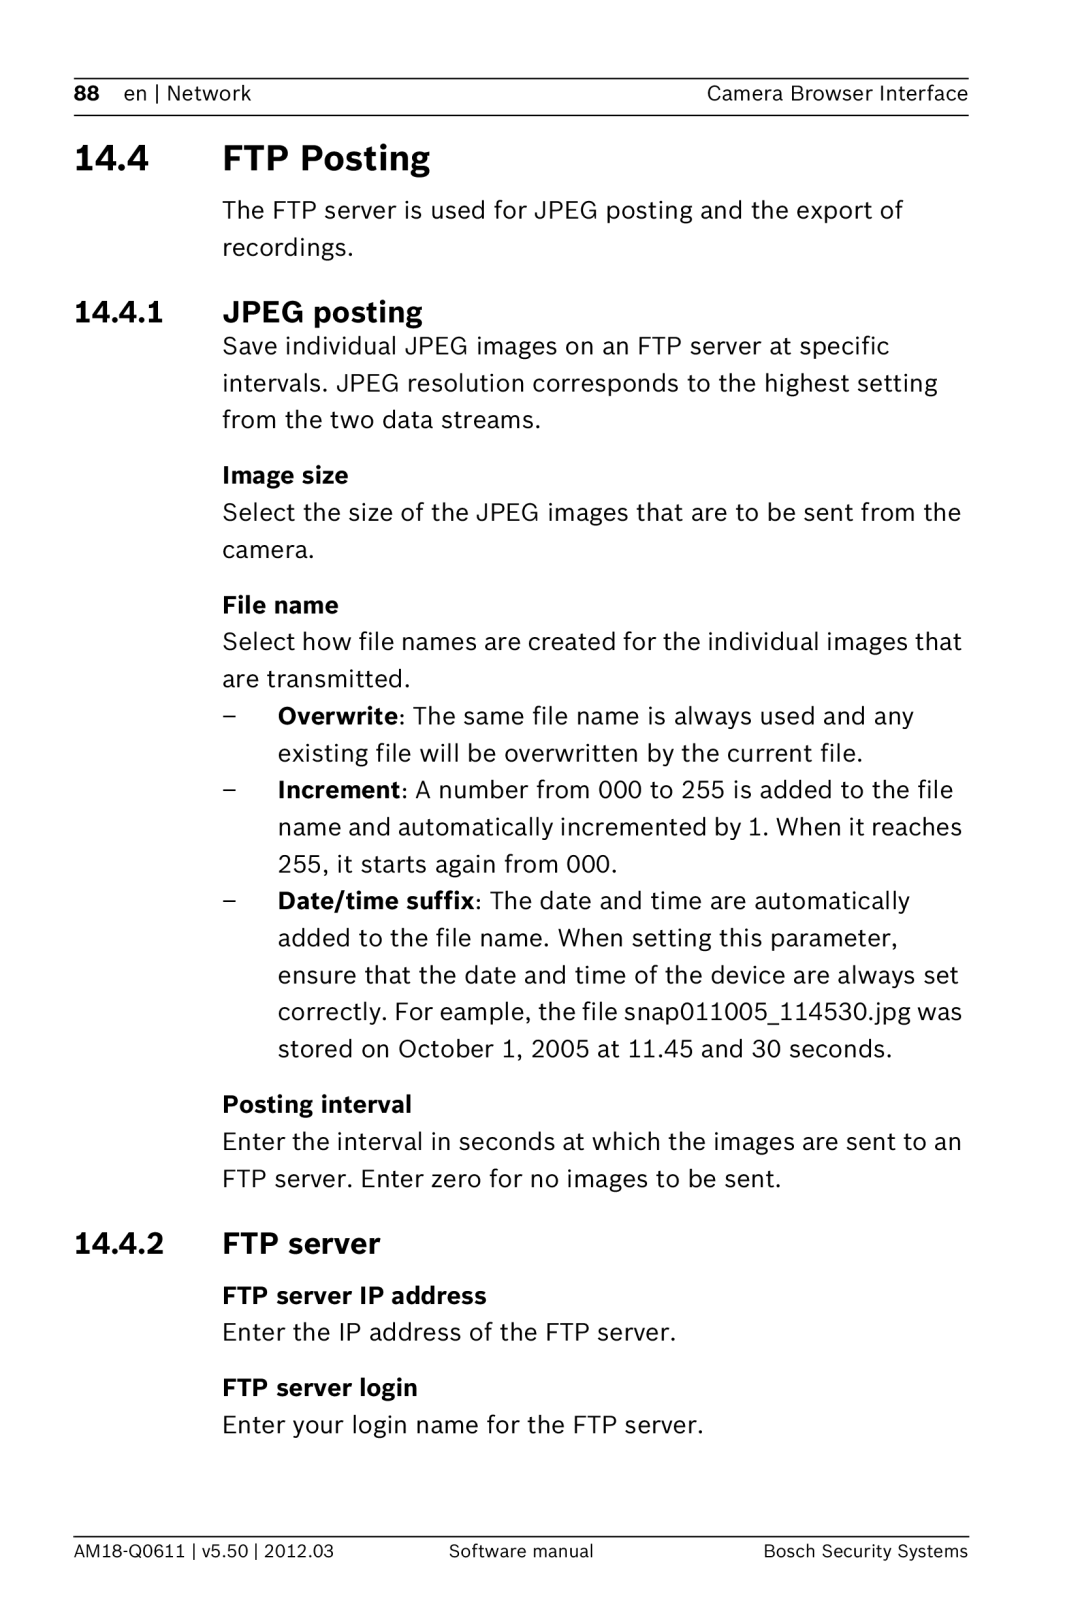 Bosch Appliances FW5.50 14.4FTP Posting, 14.4.1JPEG posting, 14.4.2FTP server, Image size, File name, Posting interval 